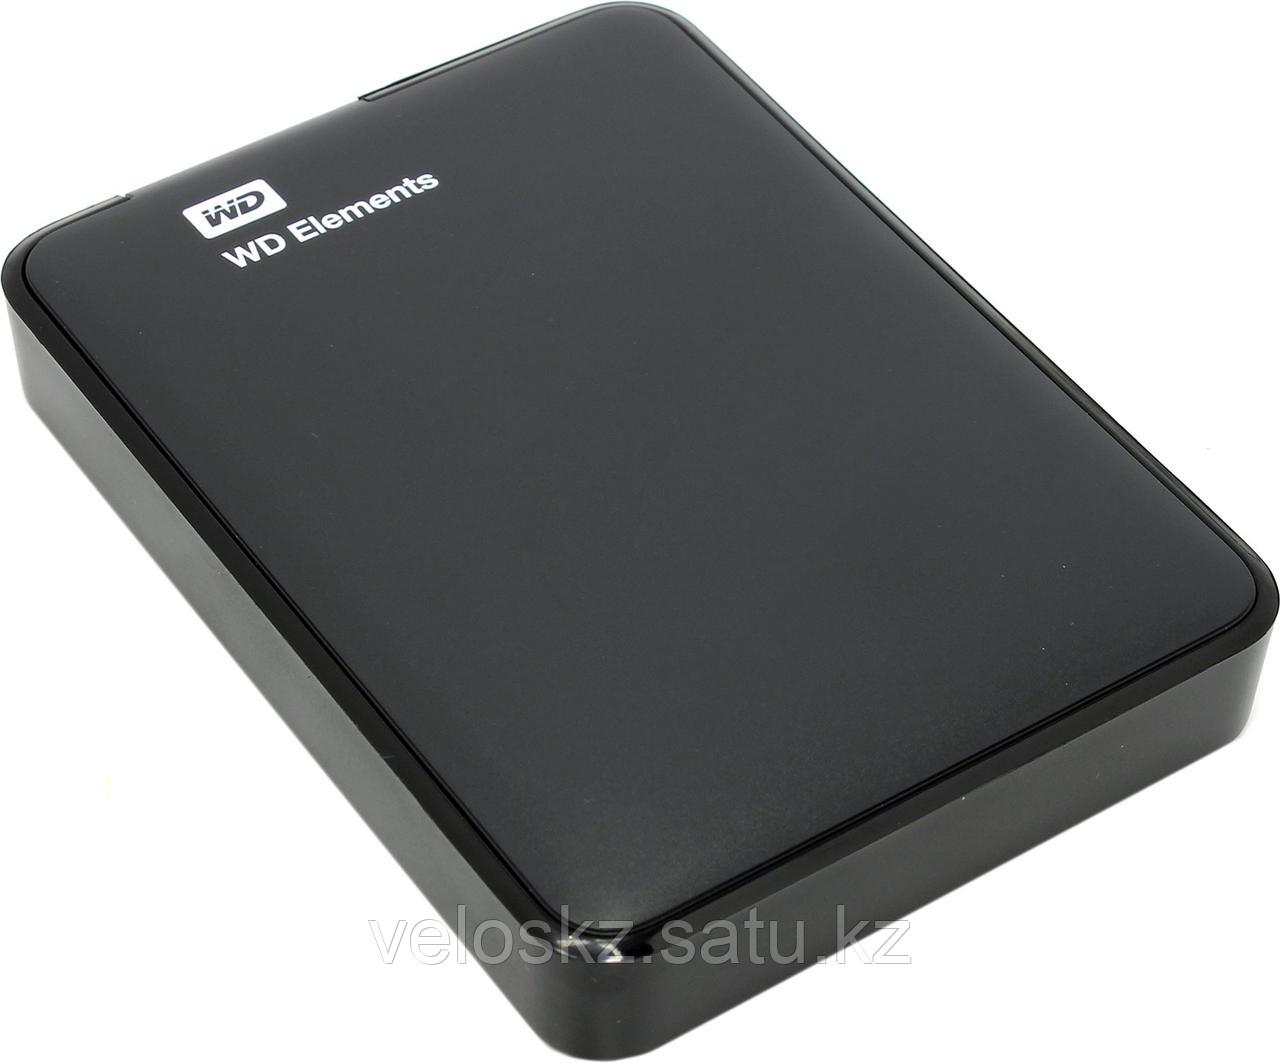 Внешний жесткий диск Western Digital WD Elements WDBU6Y0020BBK, 2000Гб, USB 3.0, 2.5"